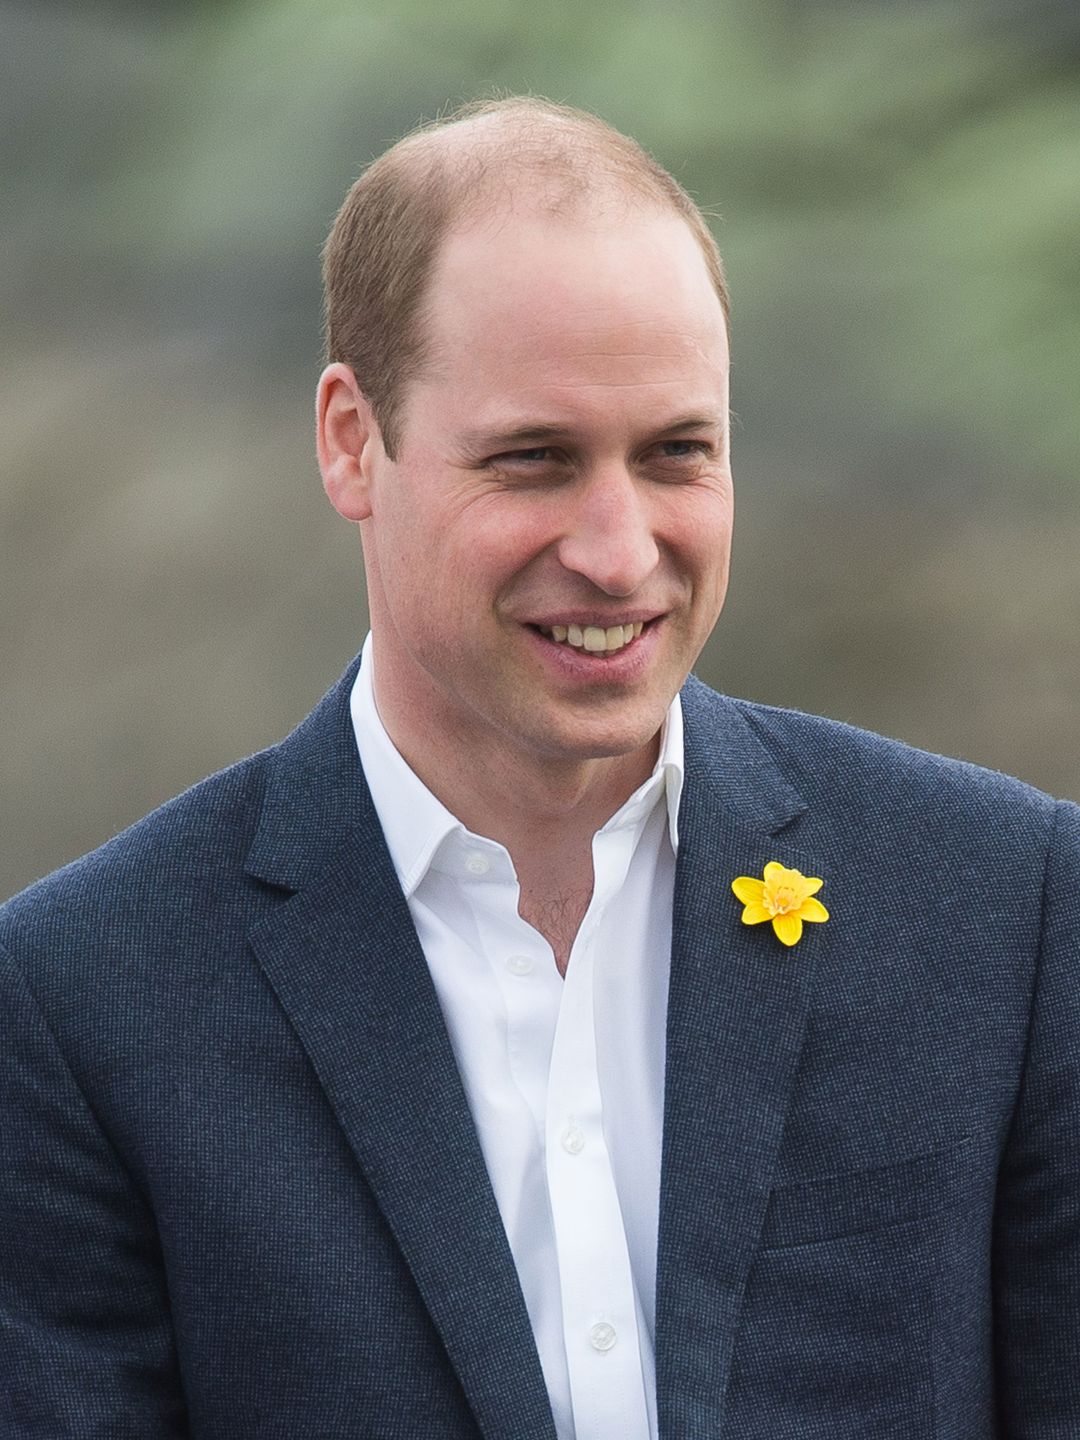 Prince William main achievements